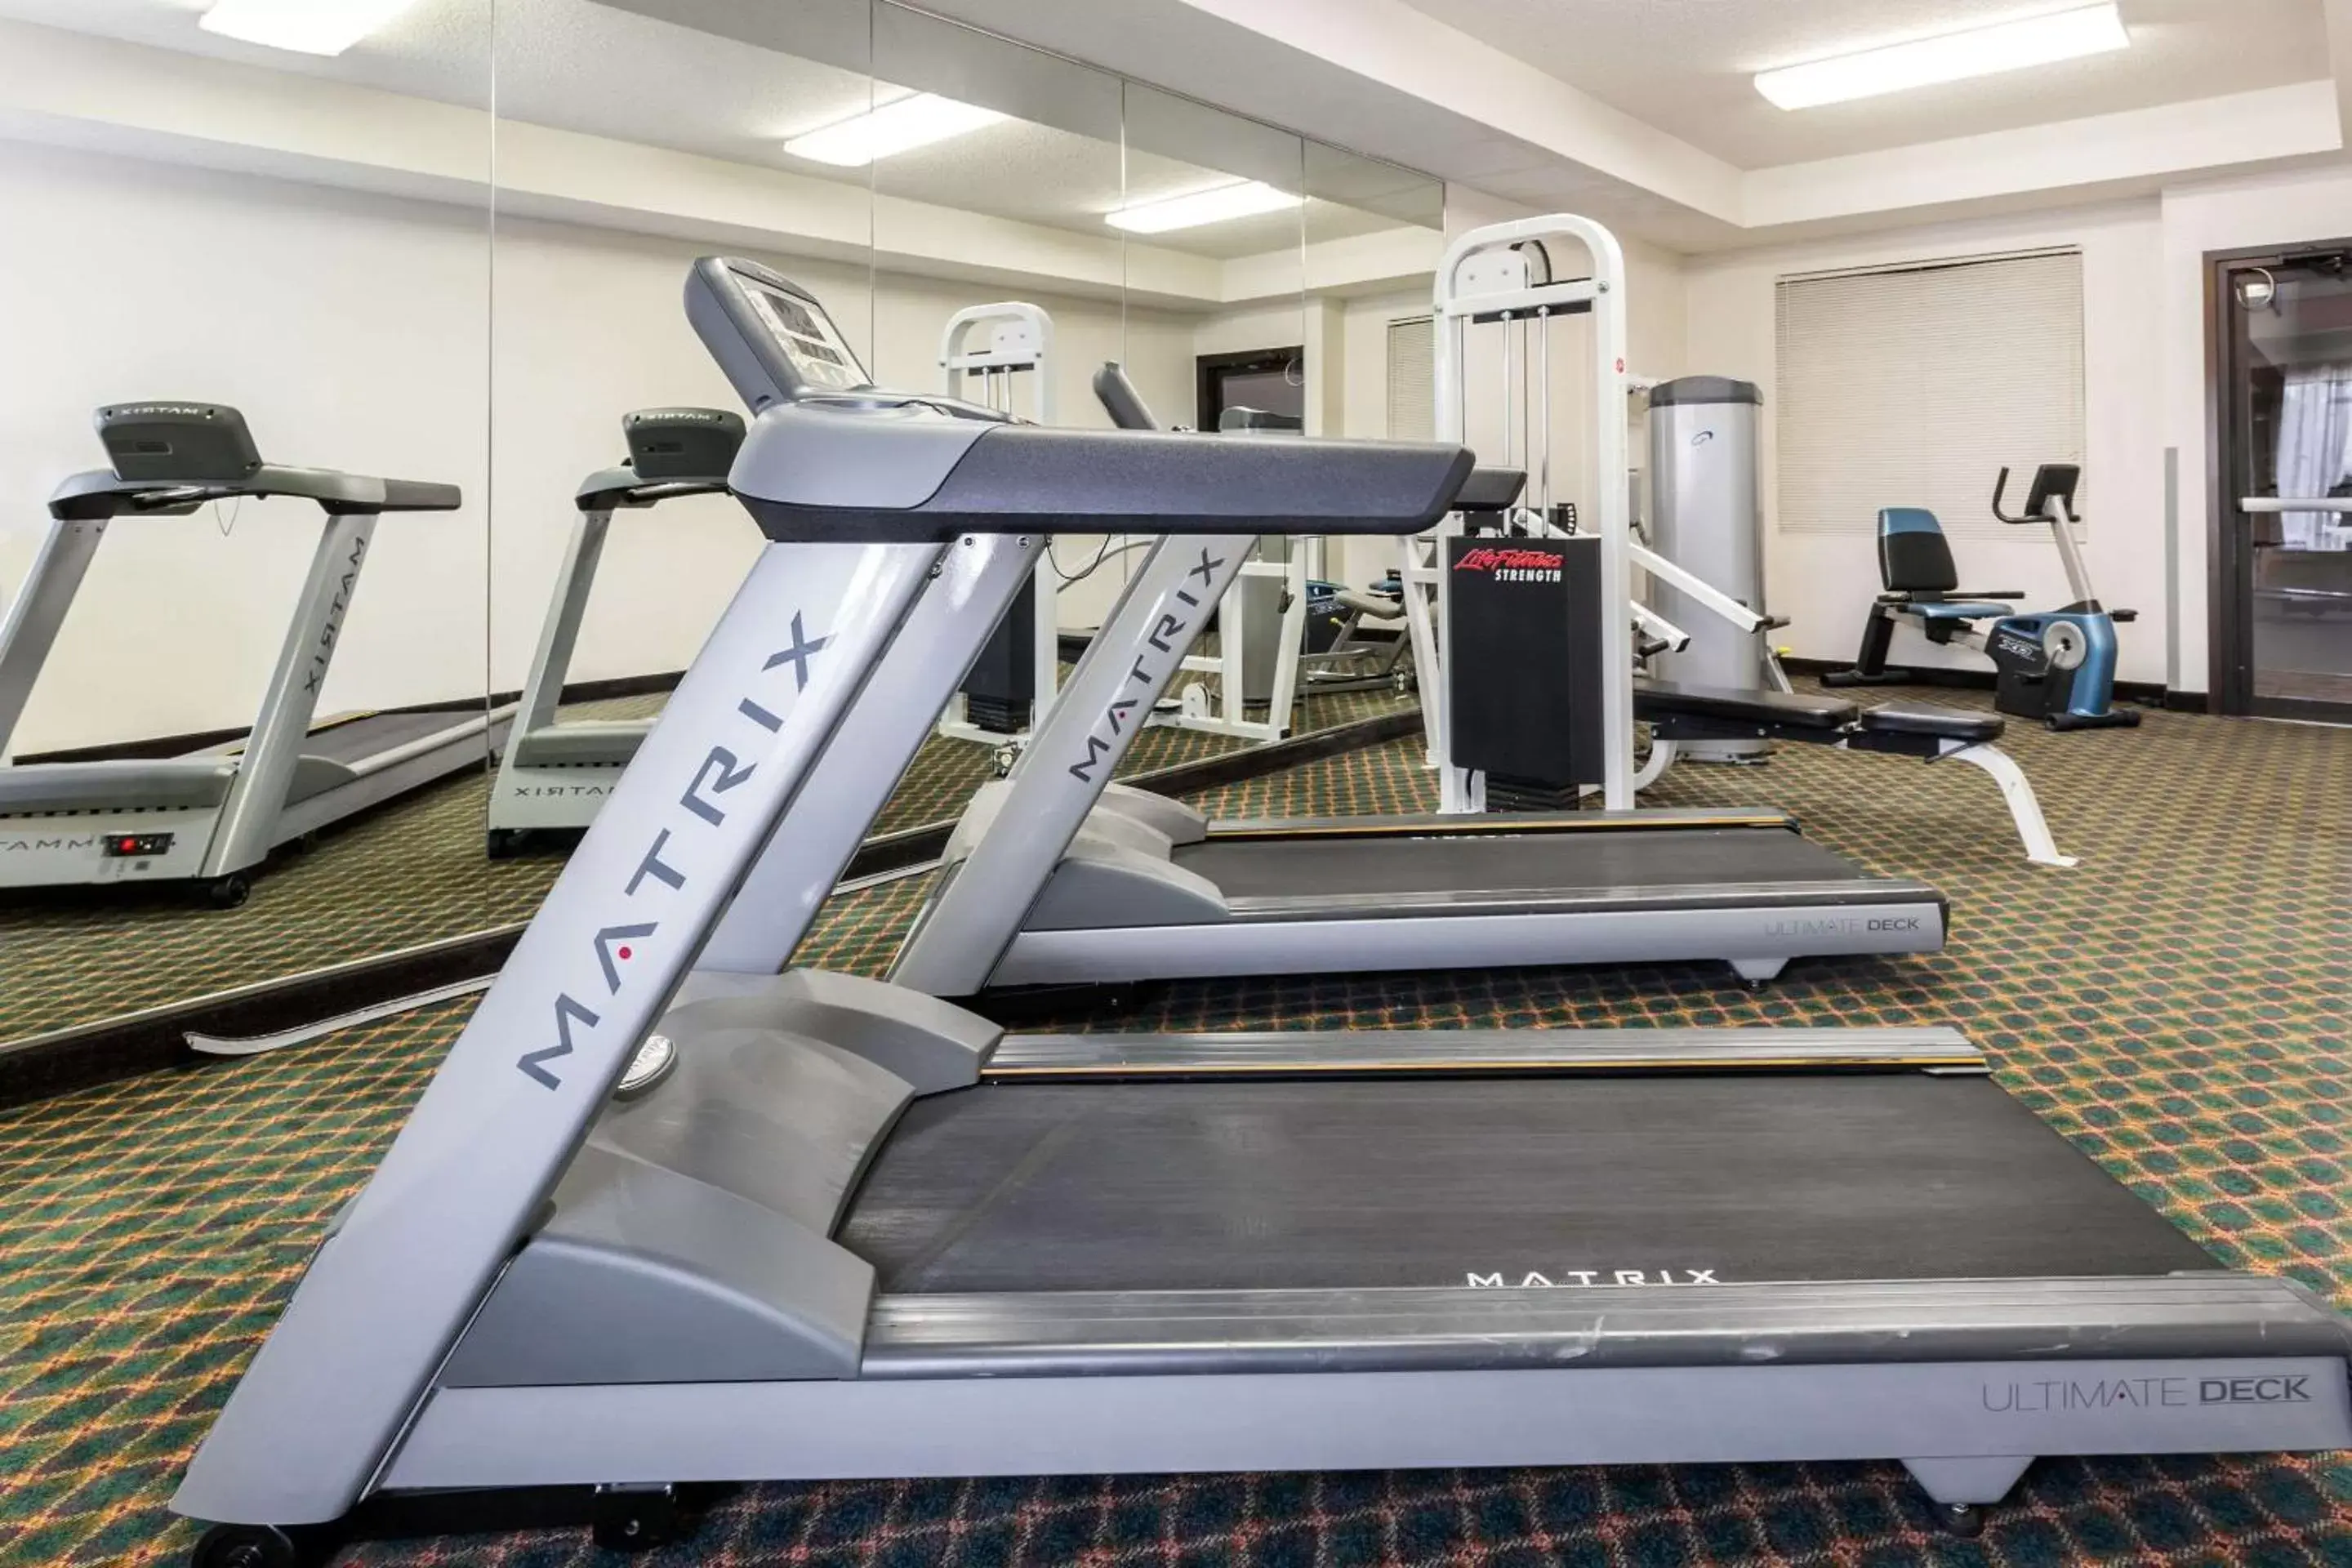 Fitness centre/facilities, Fitness Center/Facilities in Comfort Inn Collinsville near St Louis